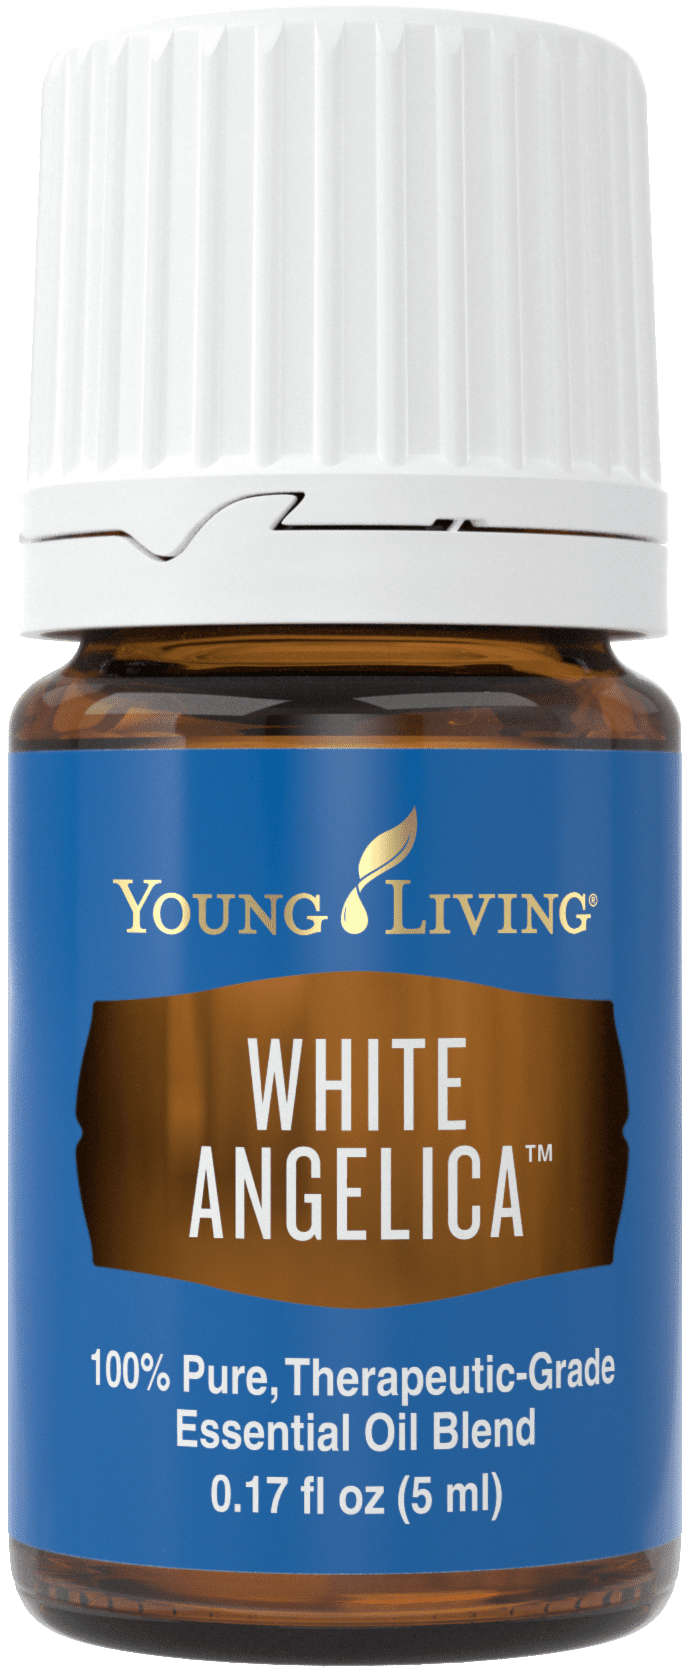 white angelica essential oil